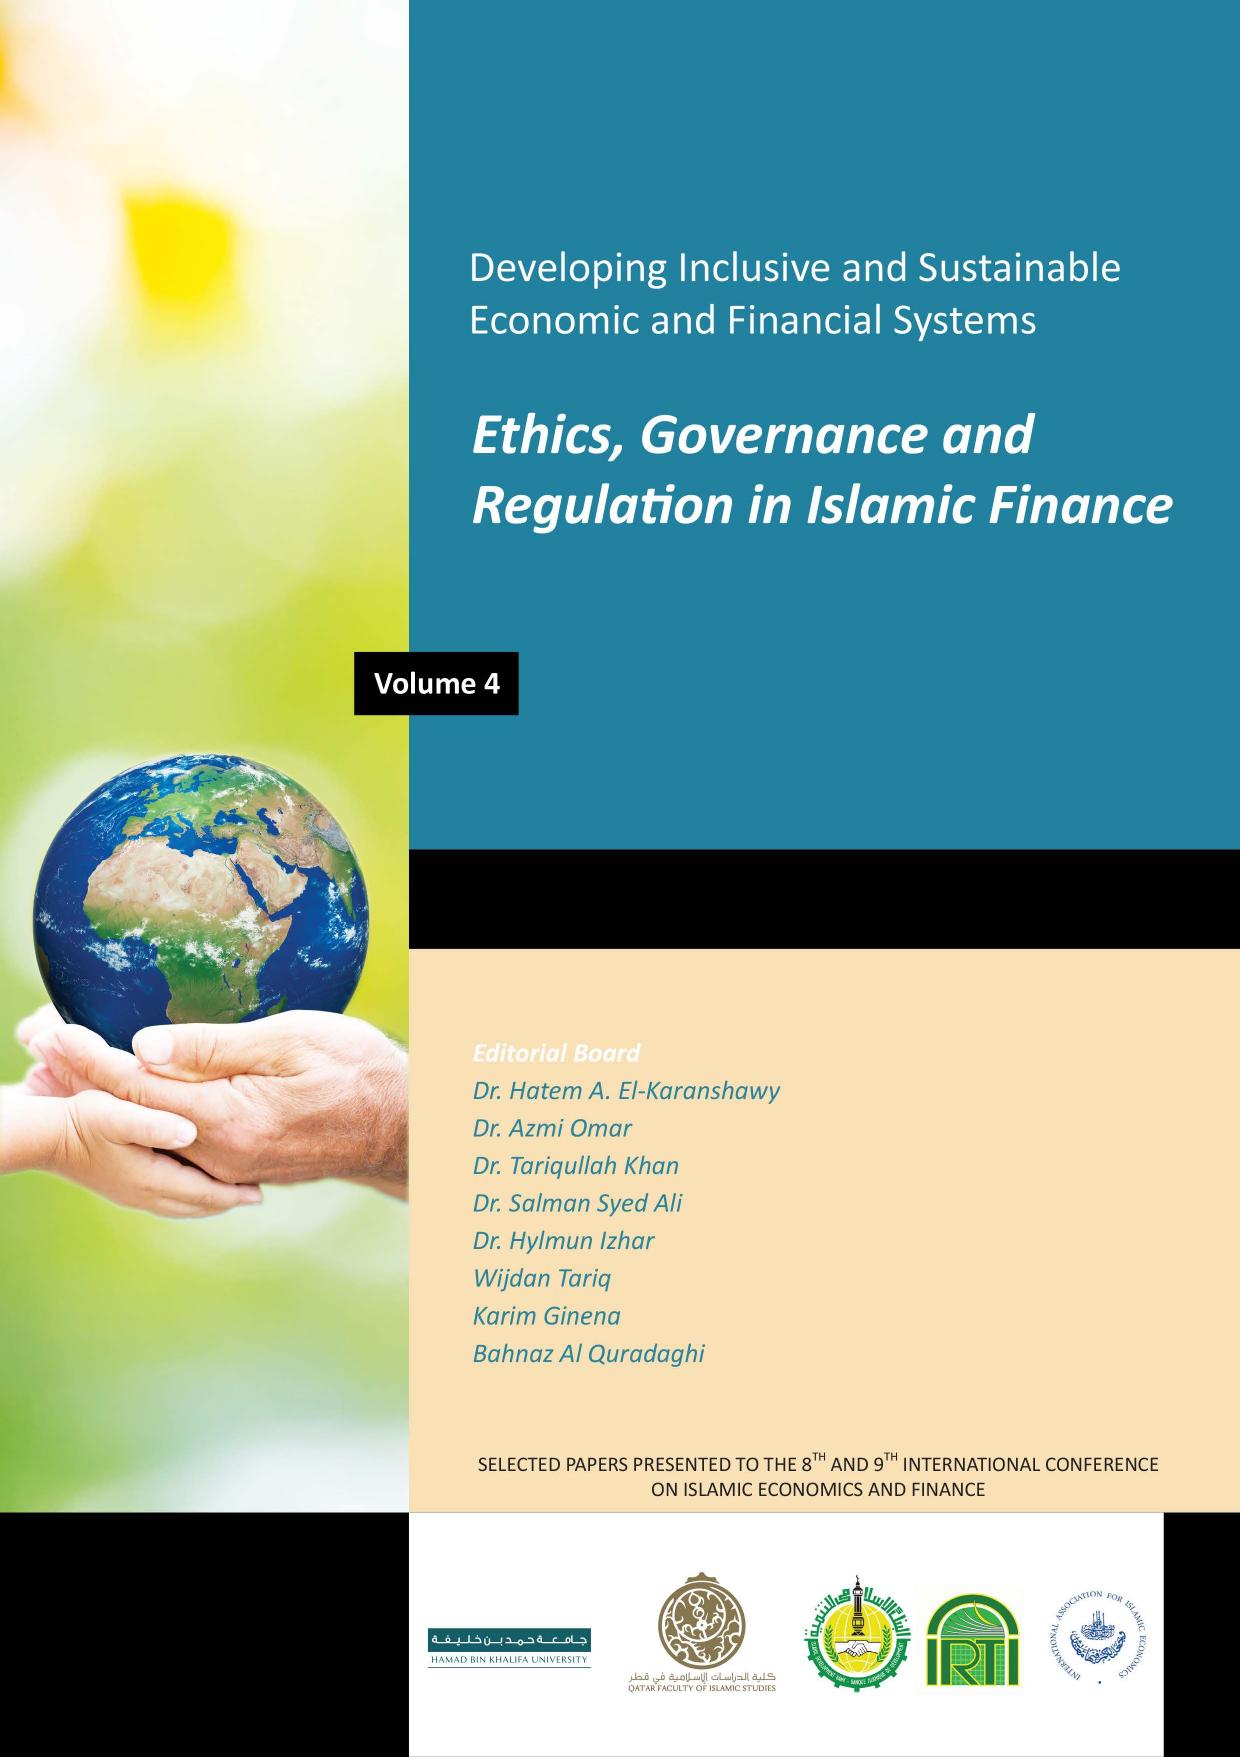 Islamic corporate social responsibility in Islamic banking 2015